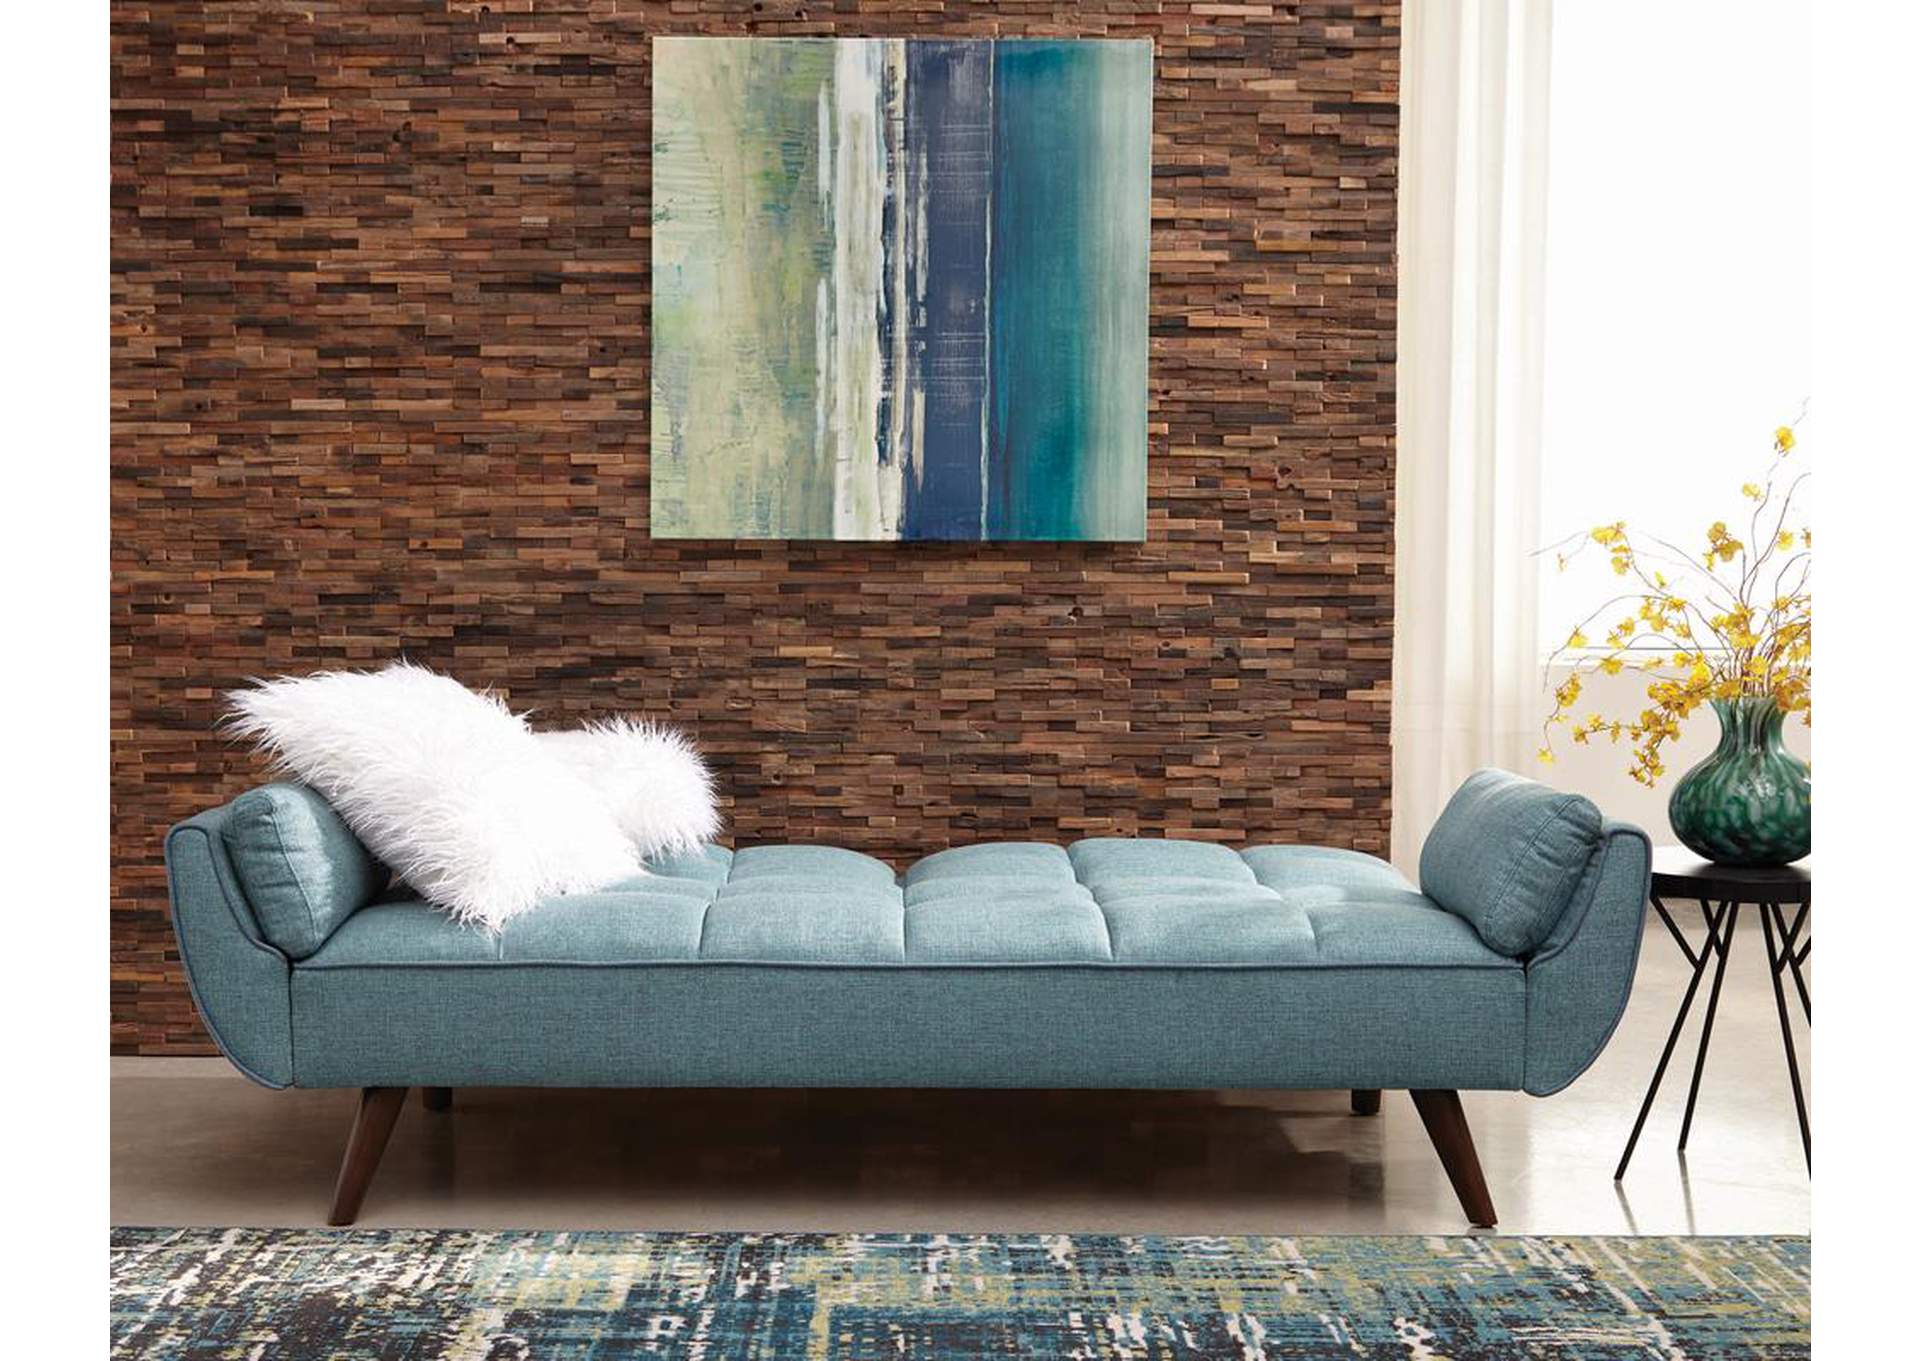 Turquoise Sofa Bed,Coaster Furniture